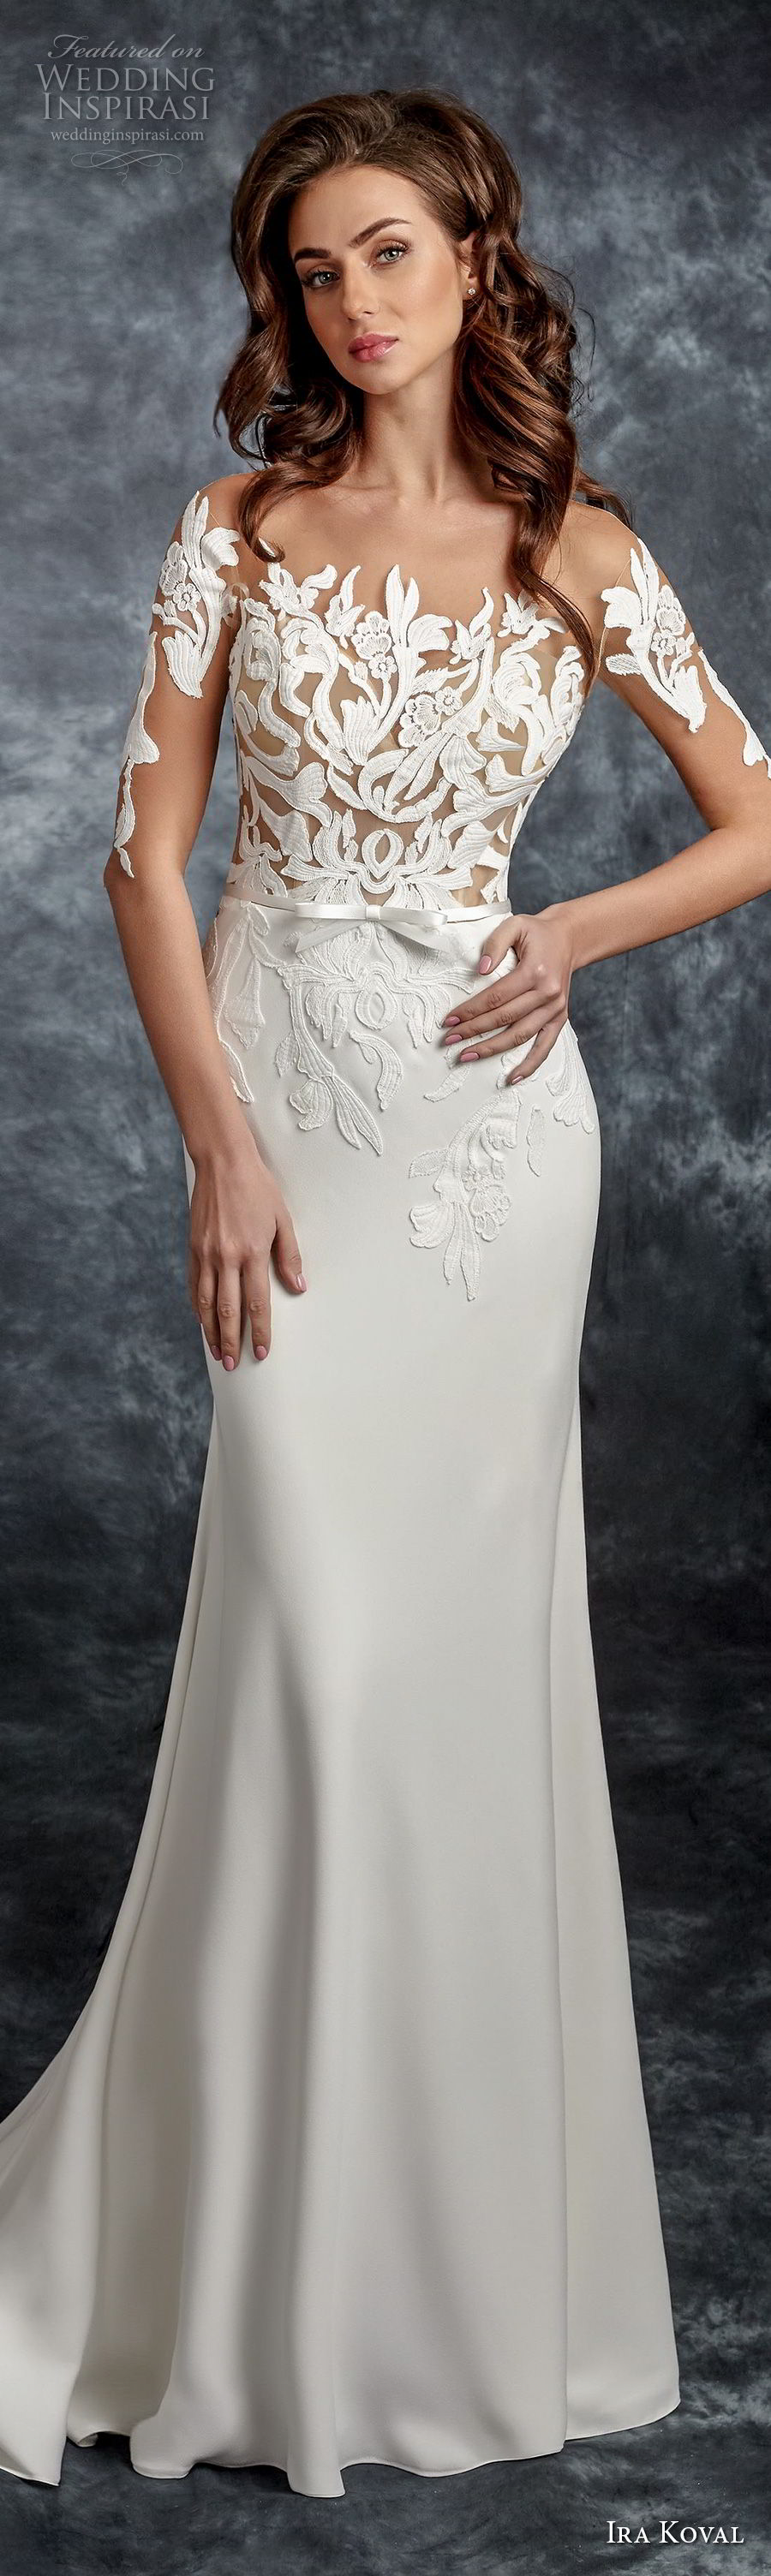 ira koval 2017 bridal half sleeves illusion floral neckline heavily embellished elegant sheath wedding dress lace button back medium train (617) mv